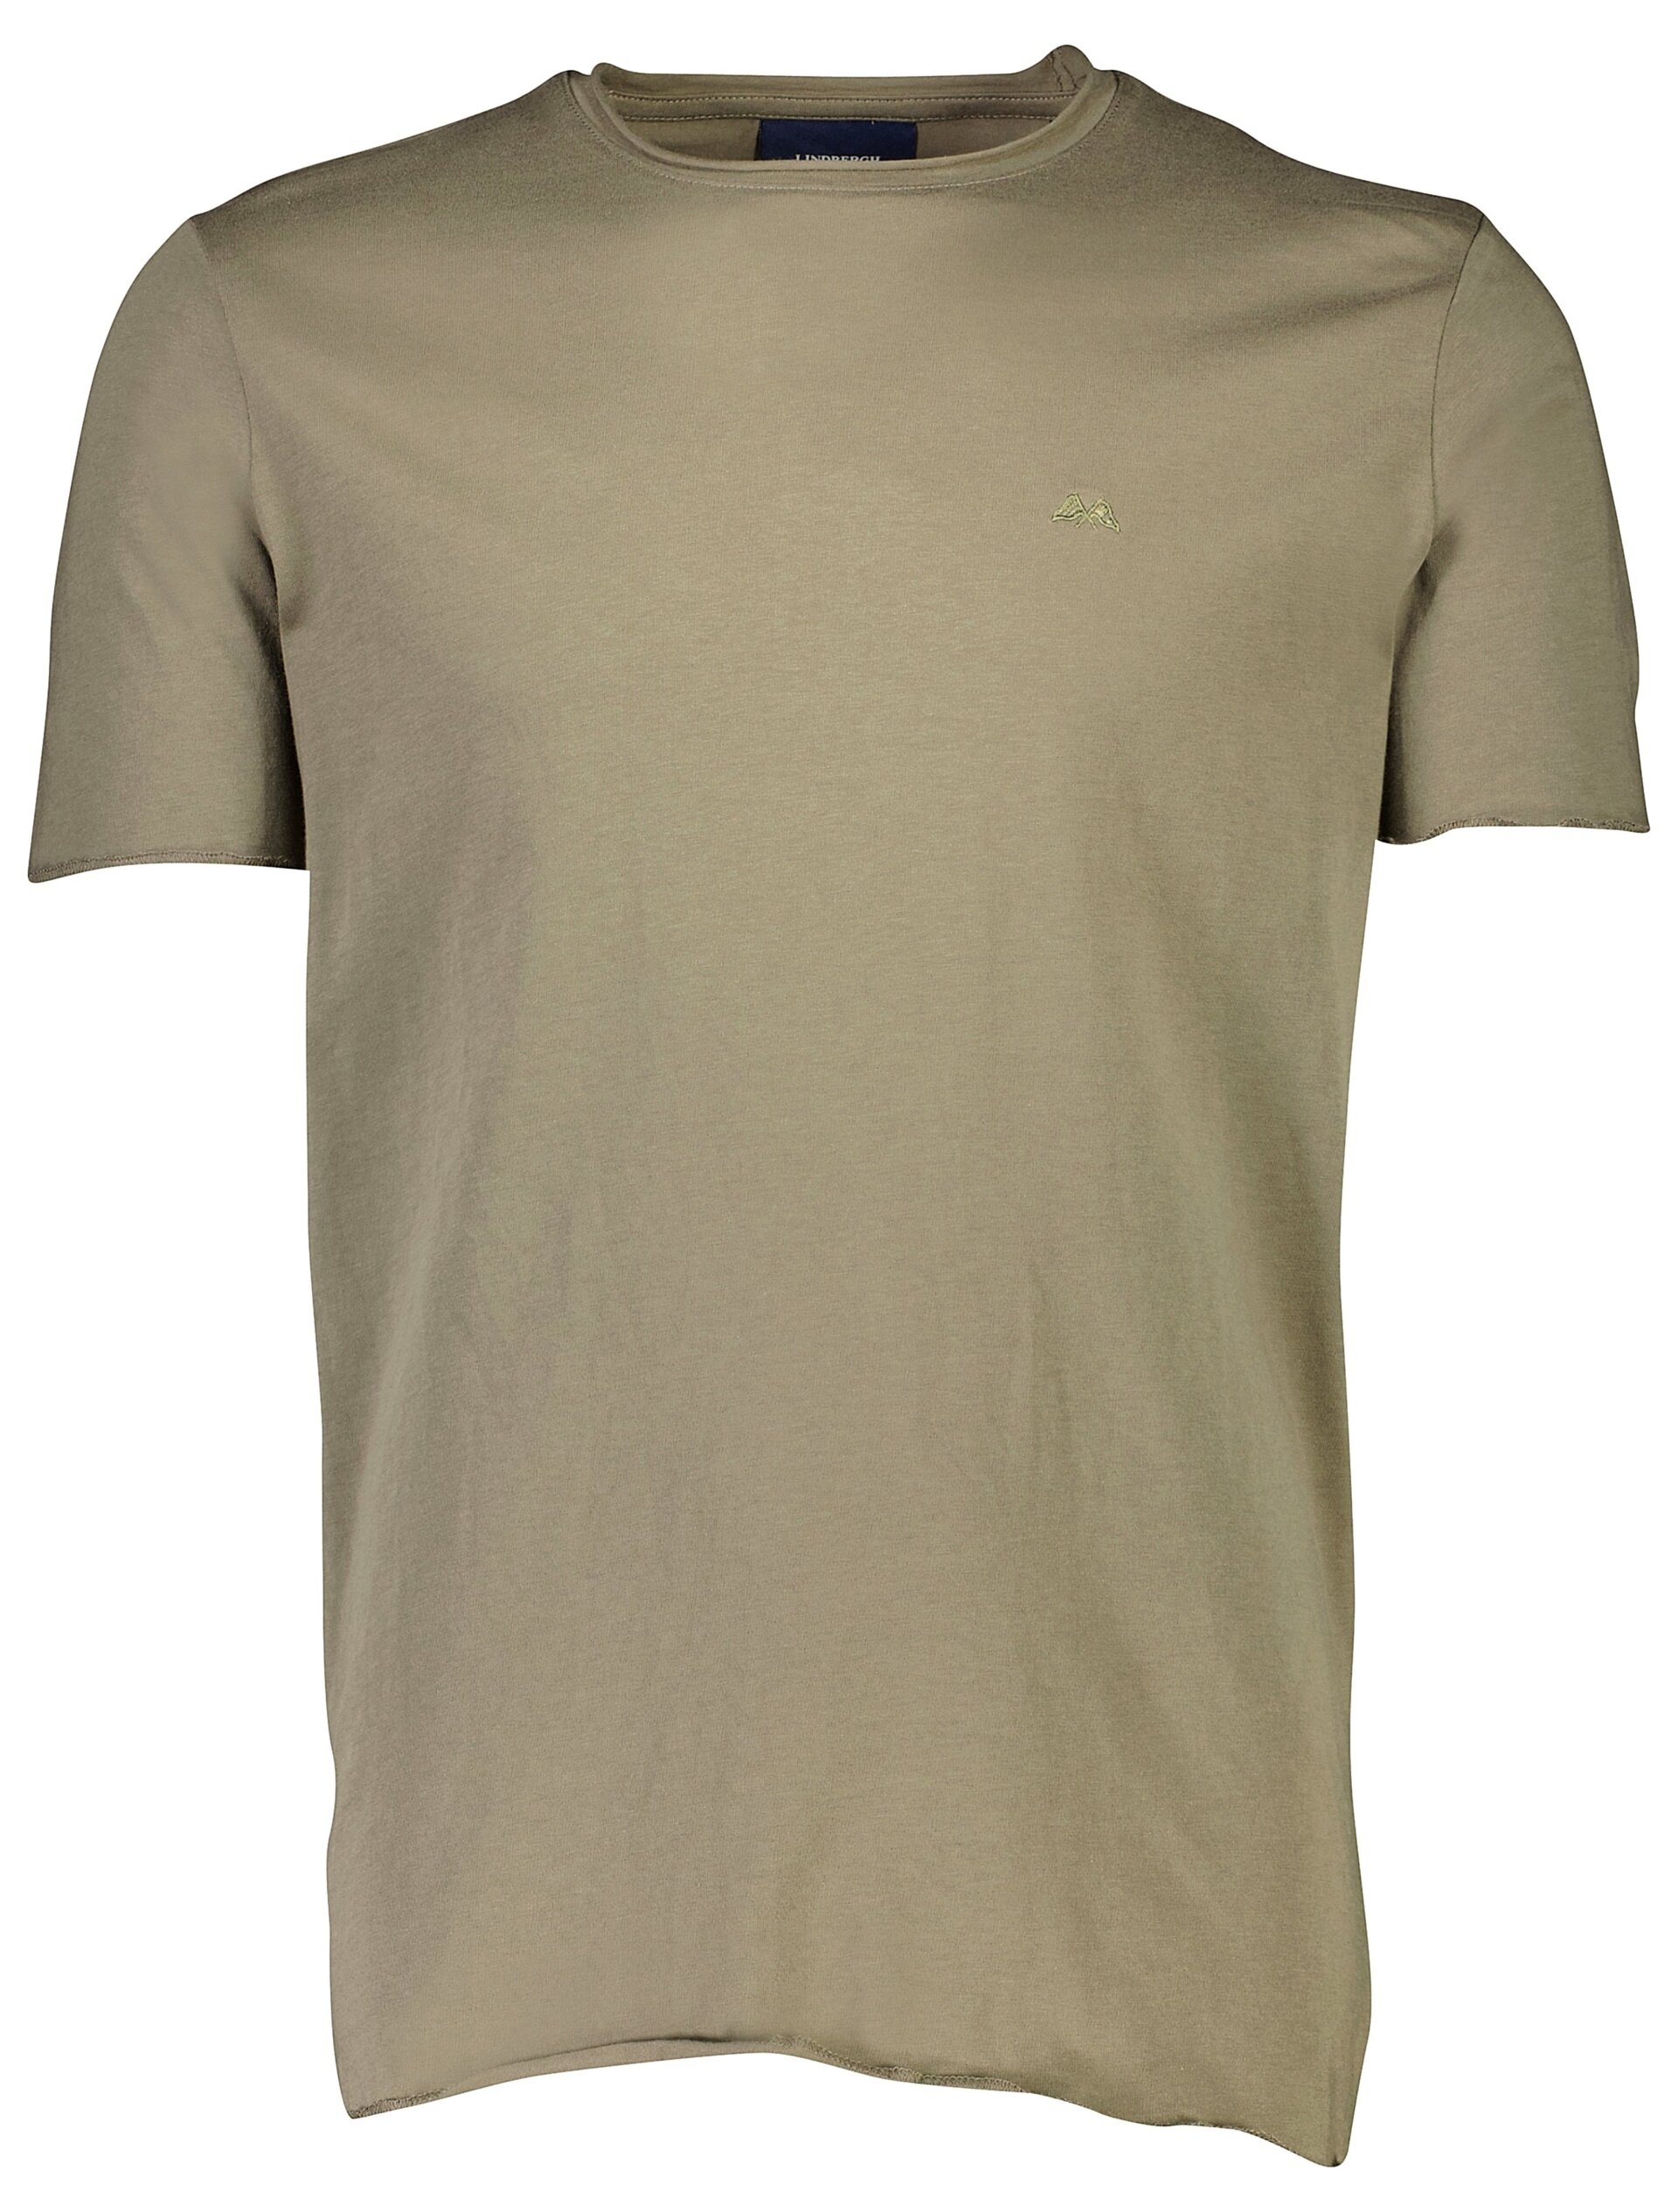 Lindbergh T-shirt grøn / lt dusty army